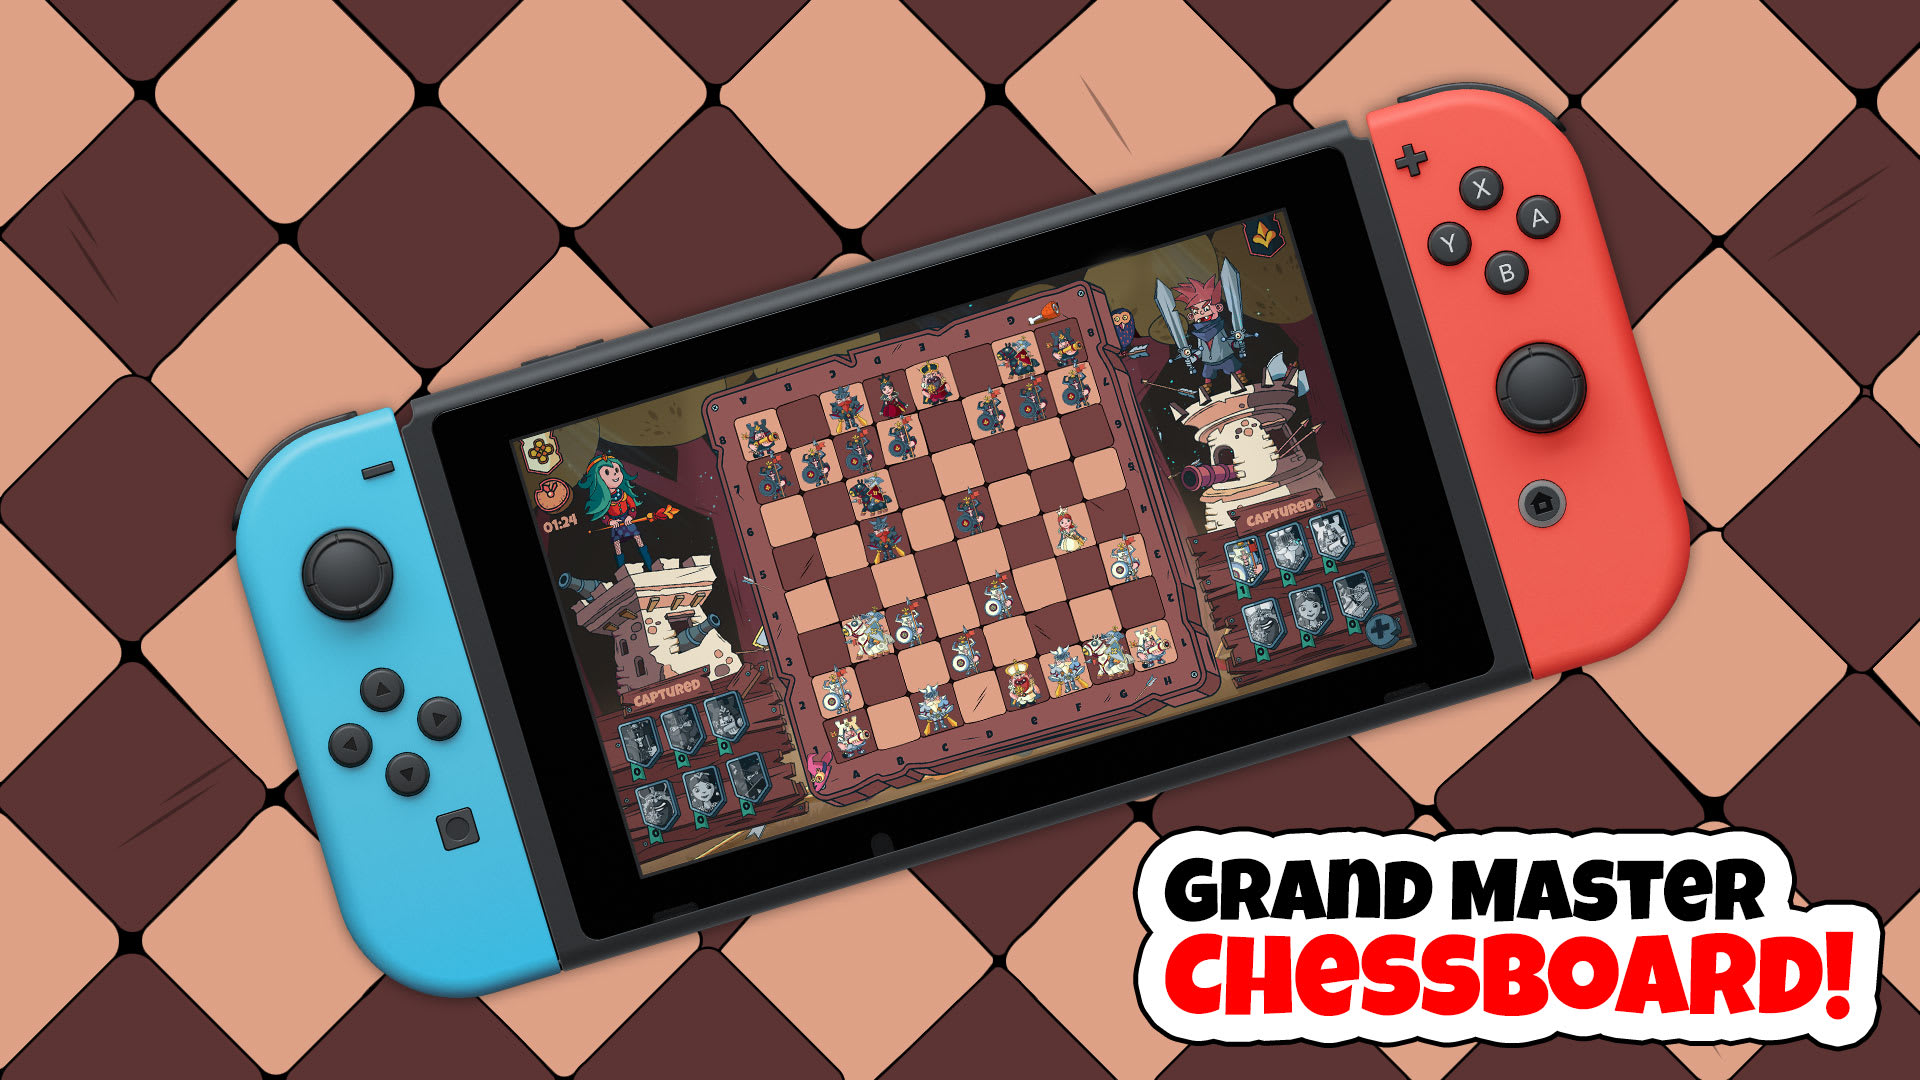 Grandmaster Chessboard